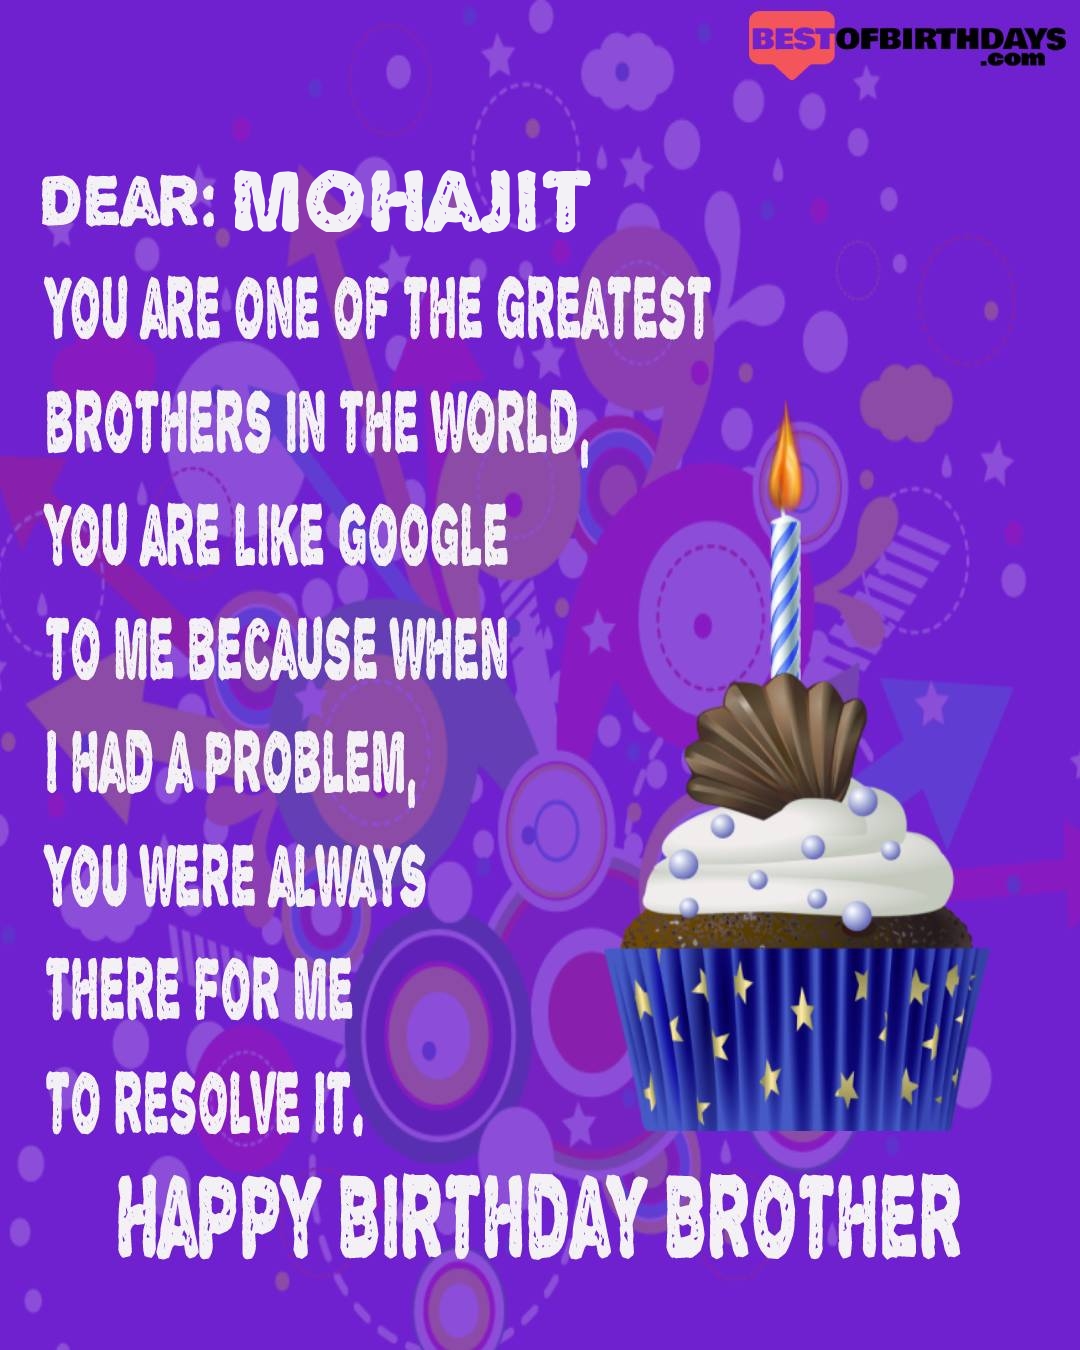 Happy birthday mohajit bhai brother bro